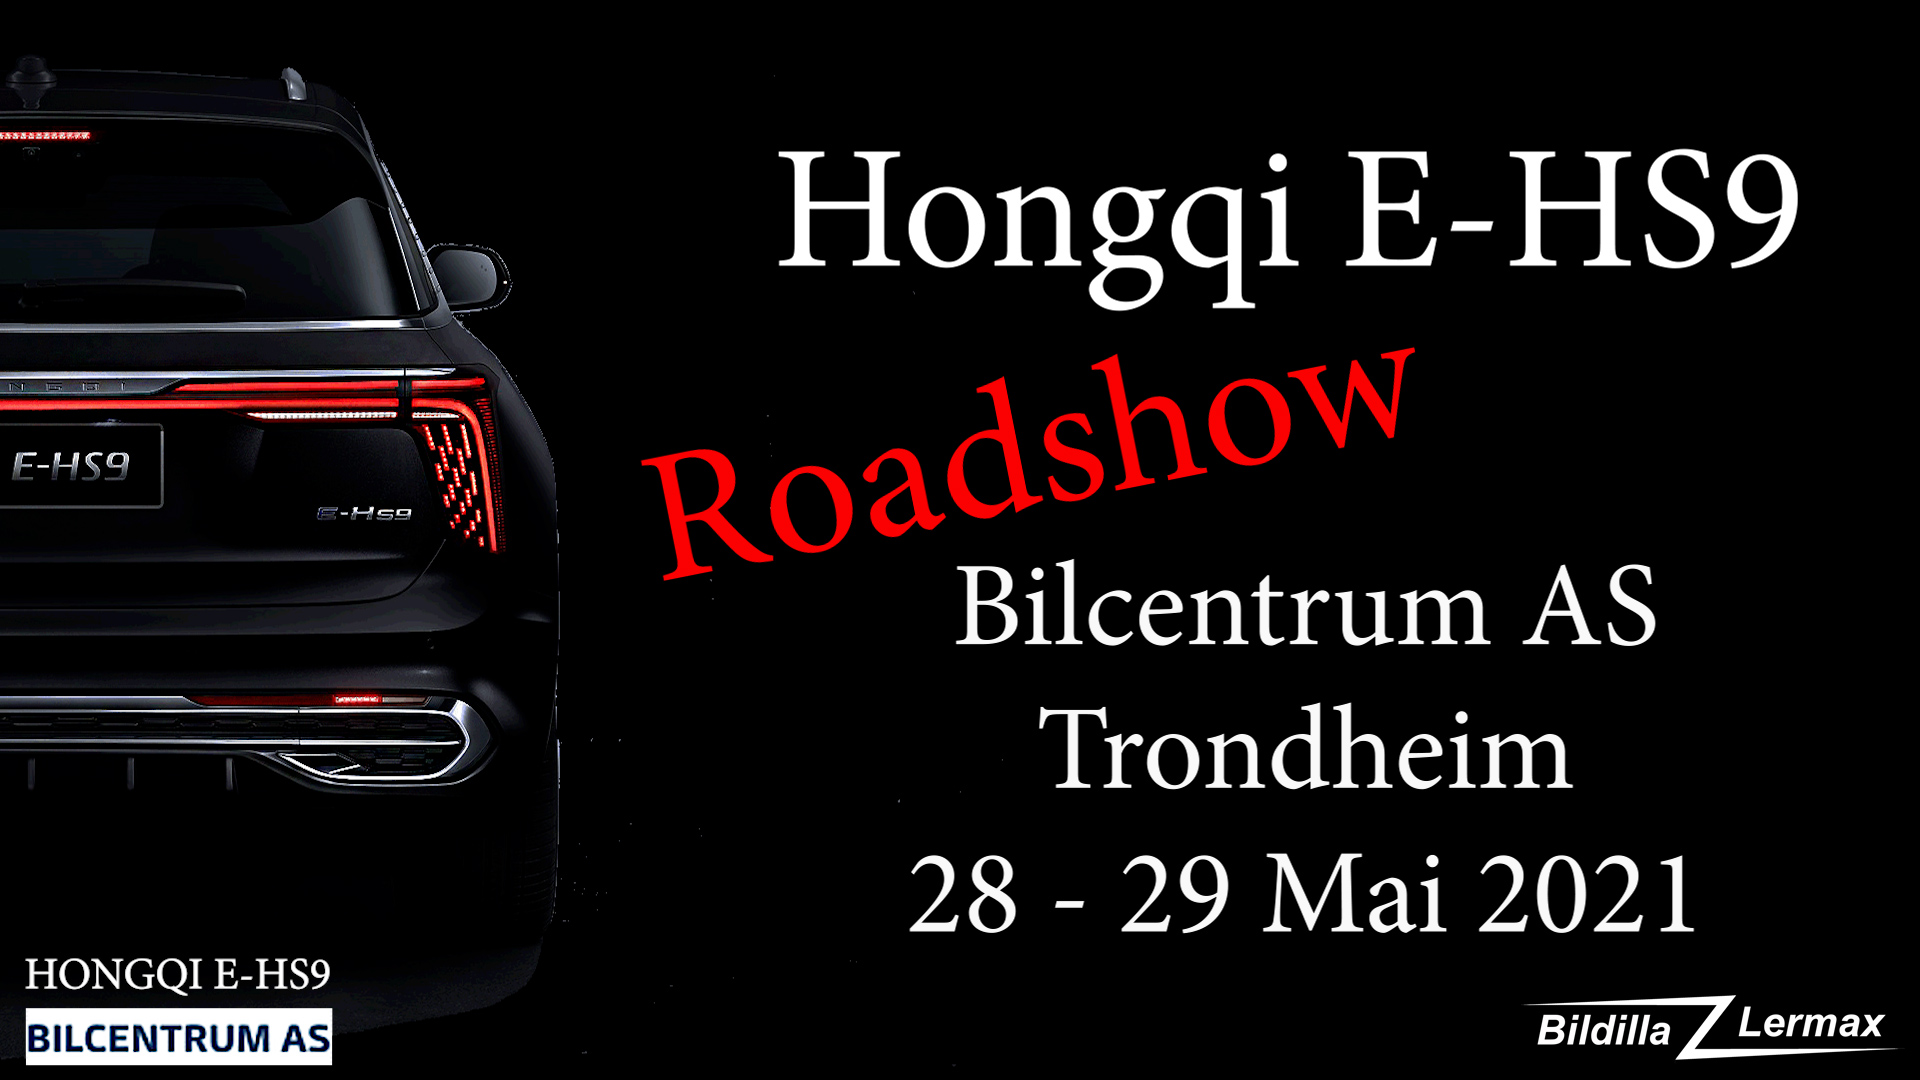 HONGQI E-HS9 Roadshow